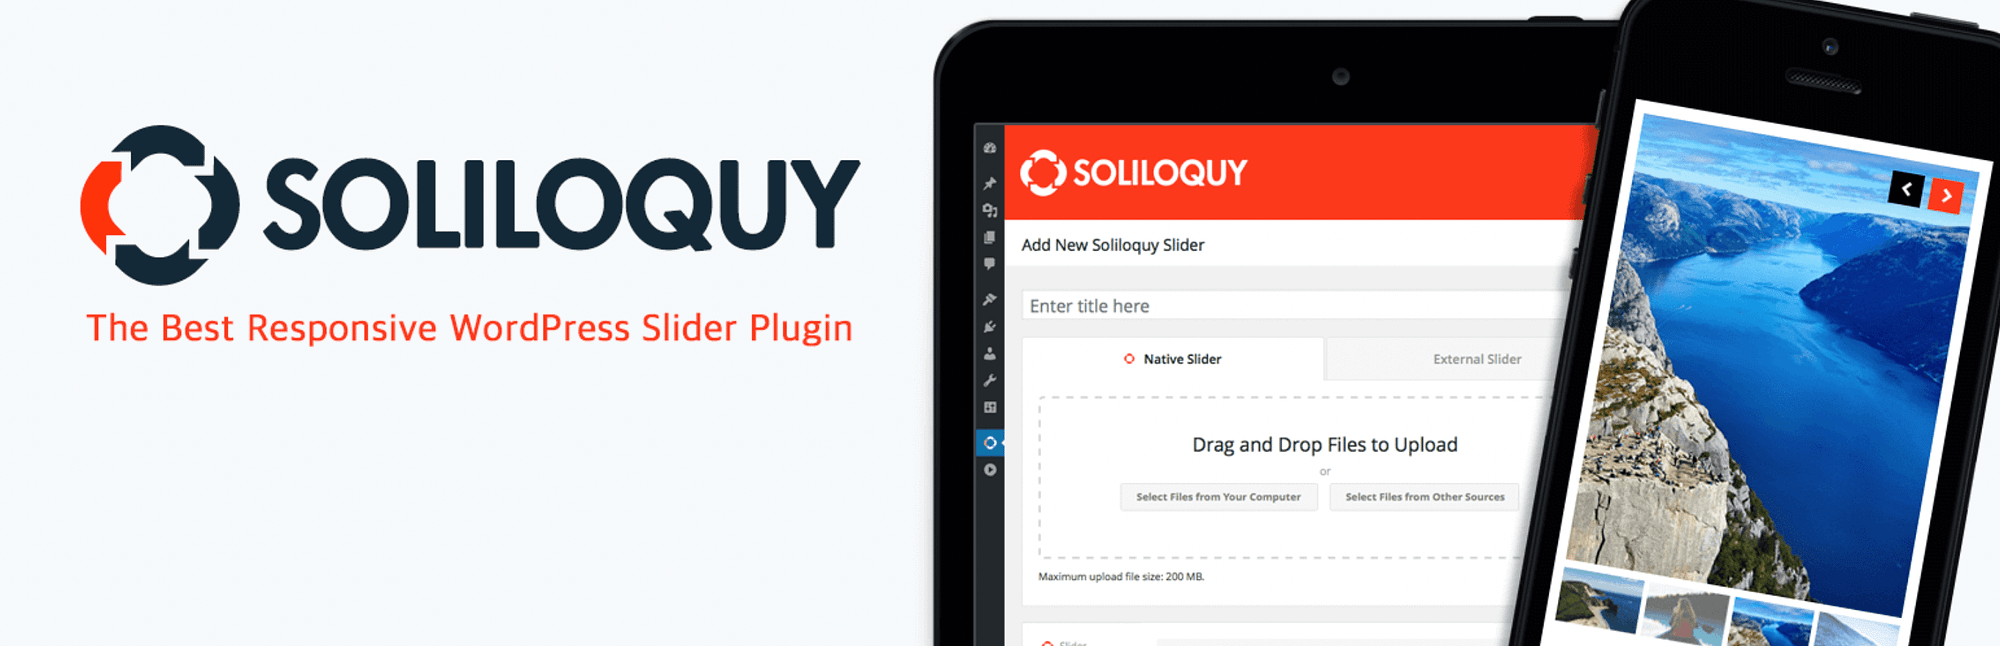 The Soliloquy WordPress slider plugin.